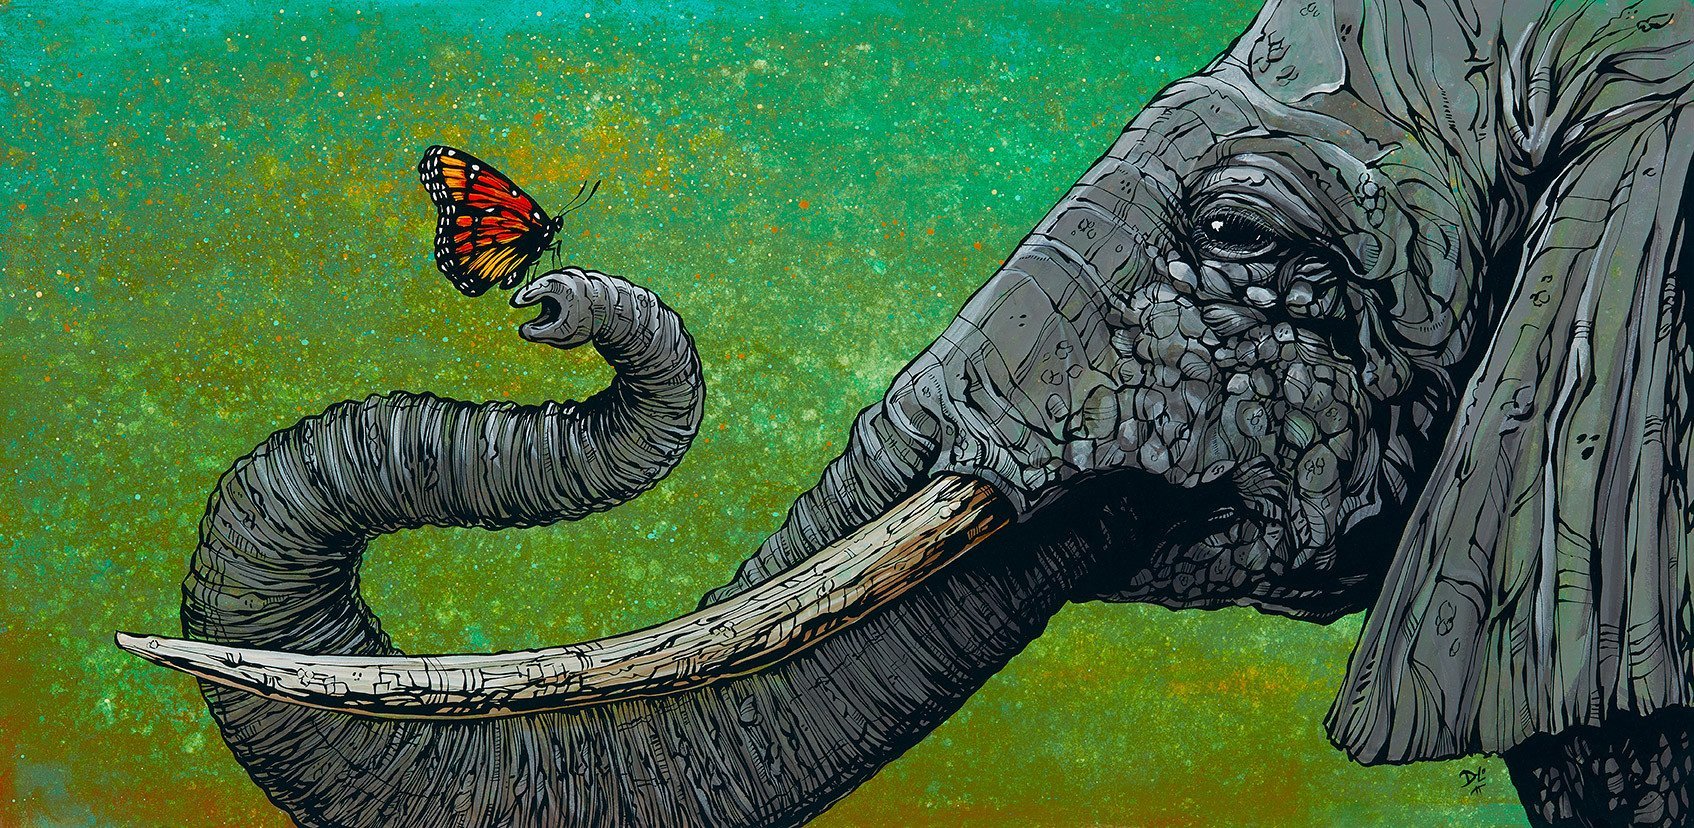 The Elephant by Day of the Dead Artist David Lozeau, Day of the Dead Art, Dia de los Muertos Art, Dia de los Muertos Artist